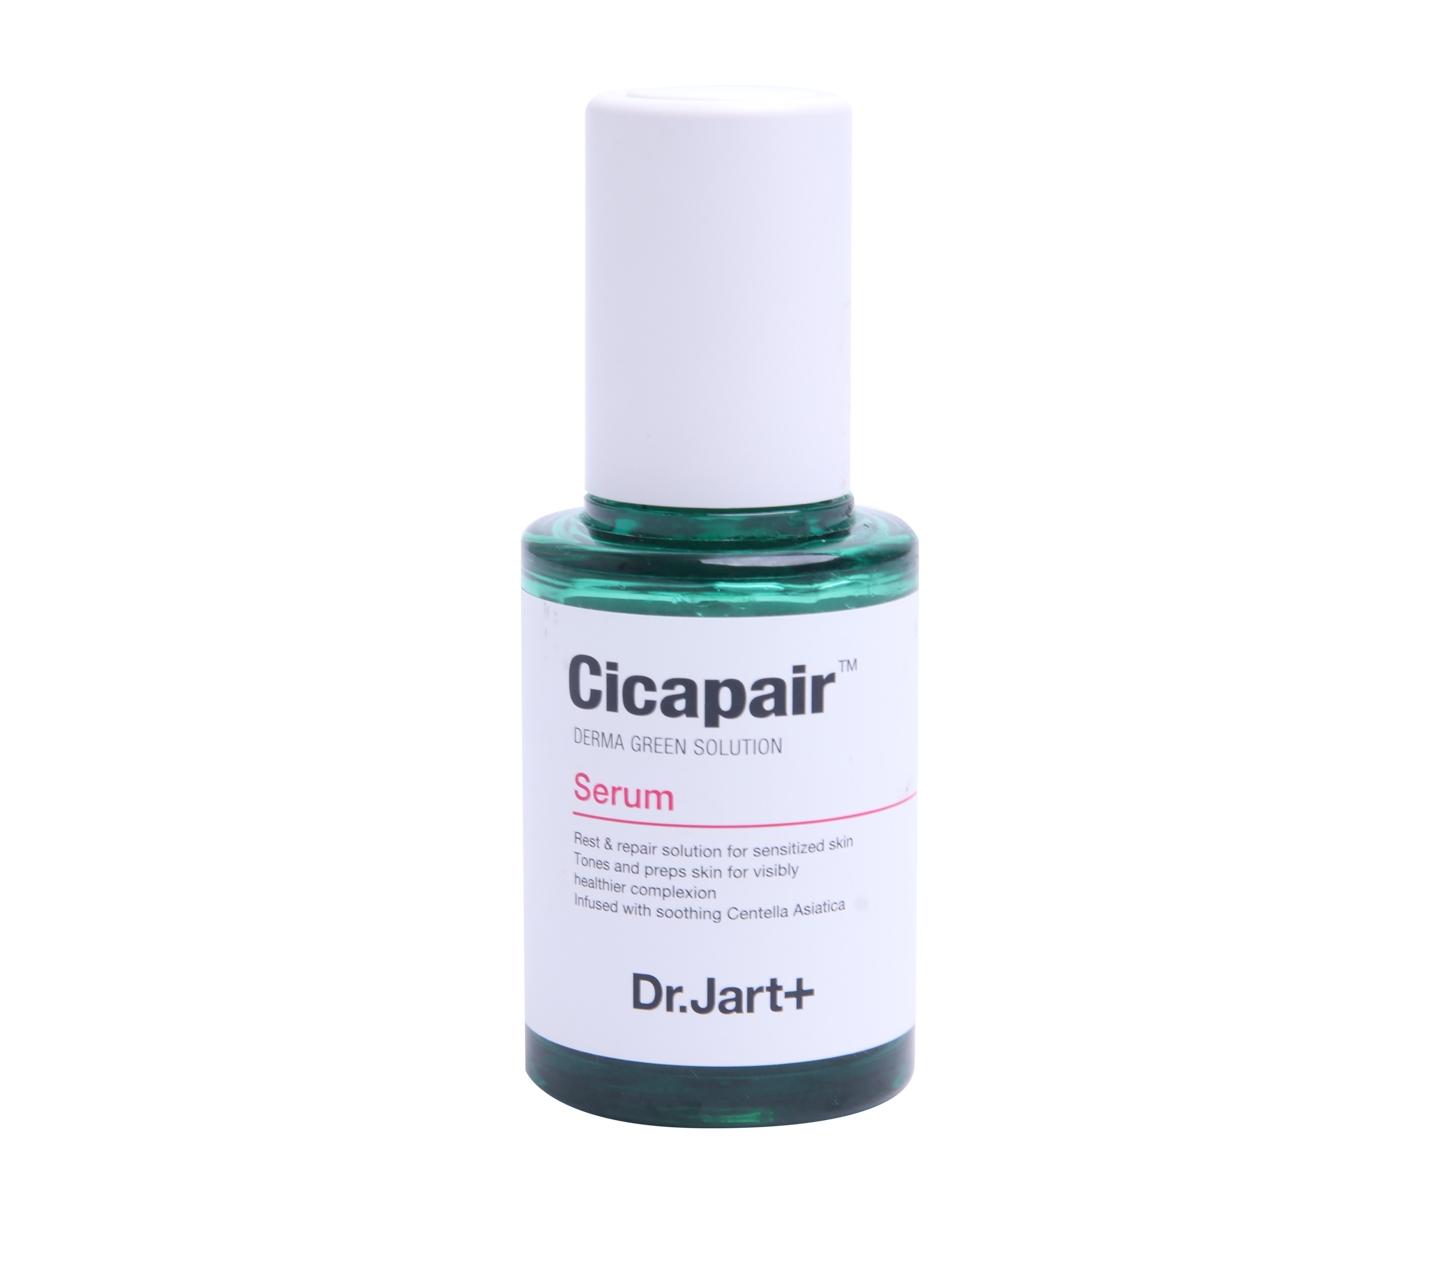 Dr. Jart+ Cicapair Derma Green Solution Serum